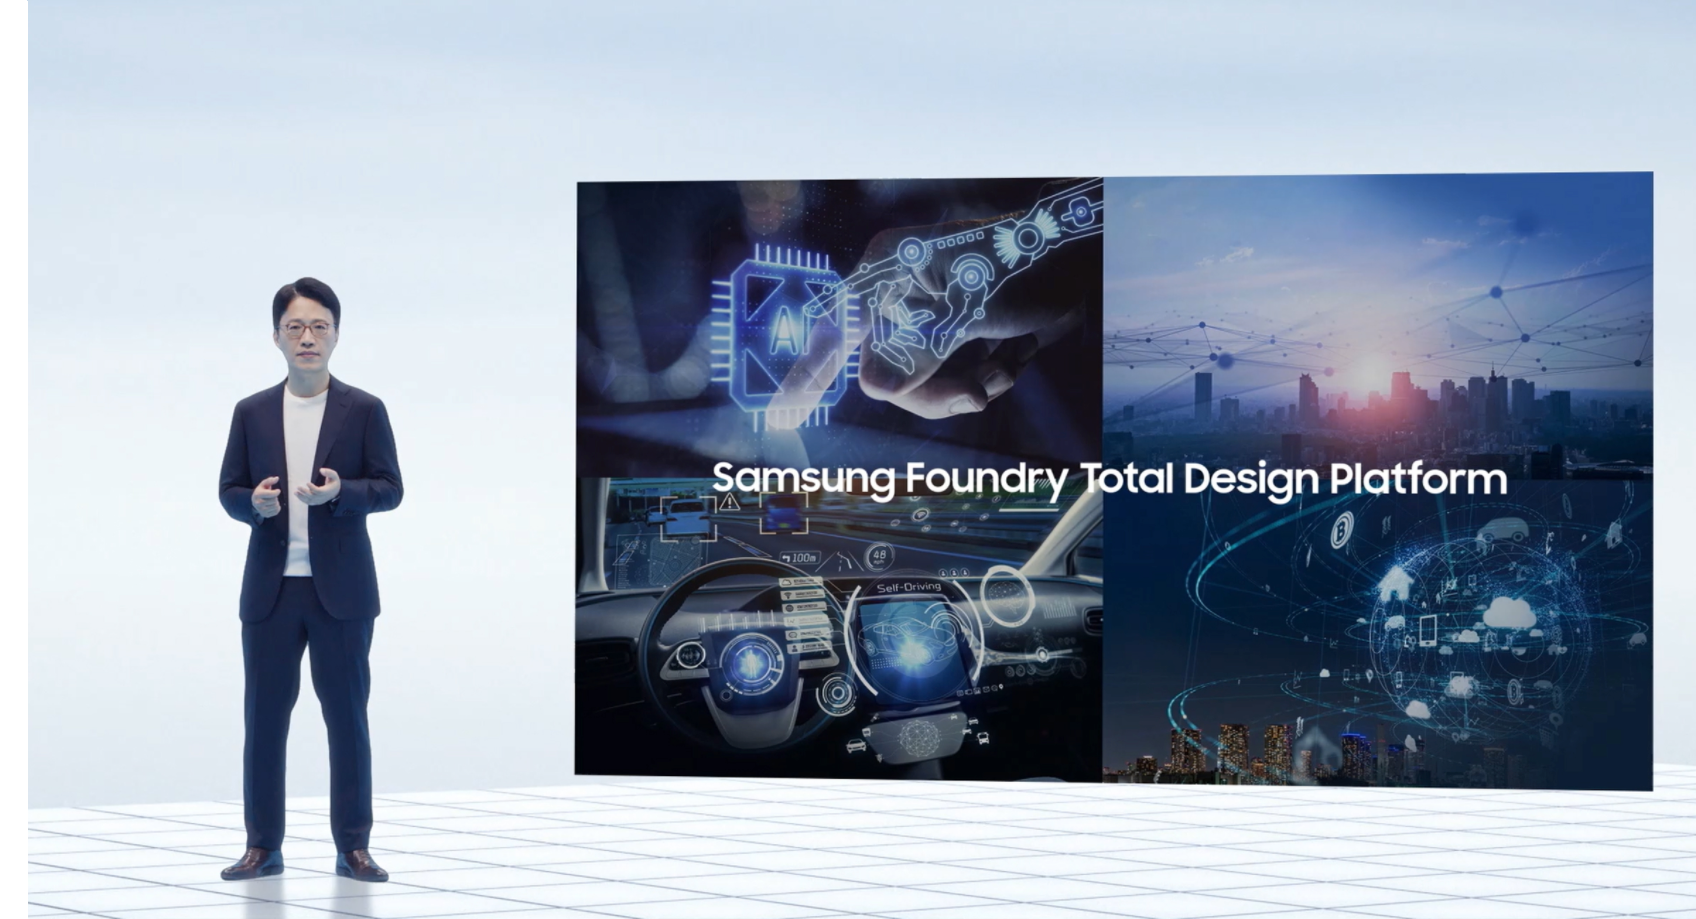 Ryan Lee's full shot talking about Samsung's total design platform